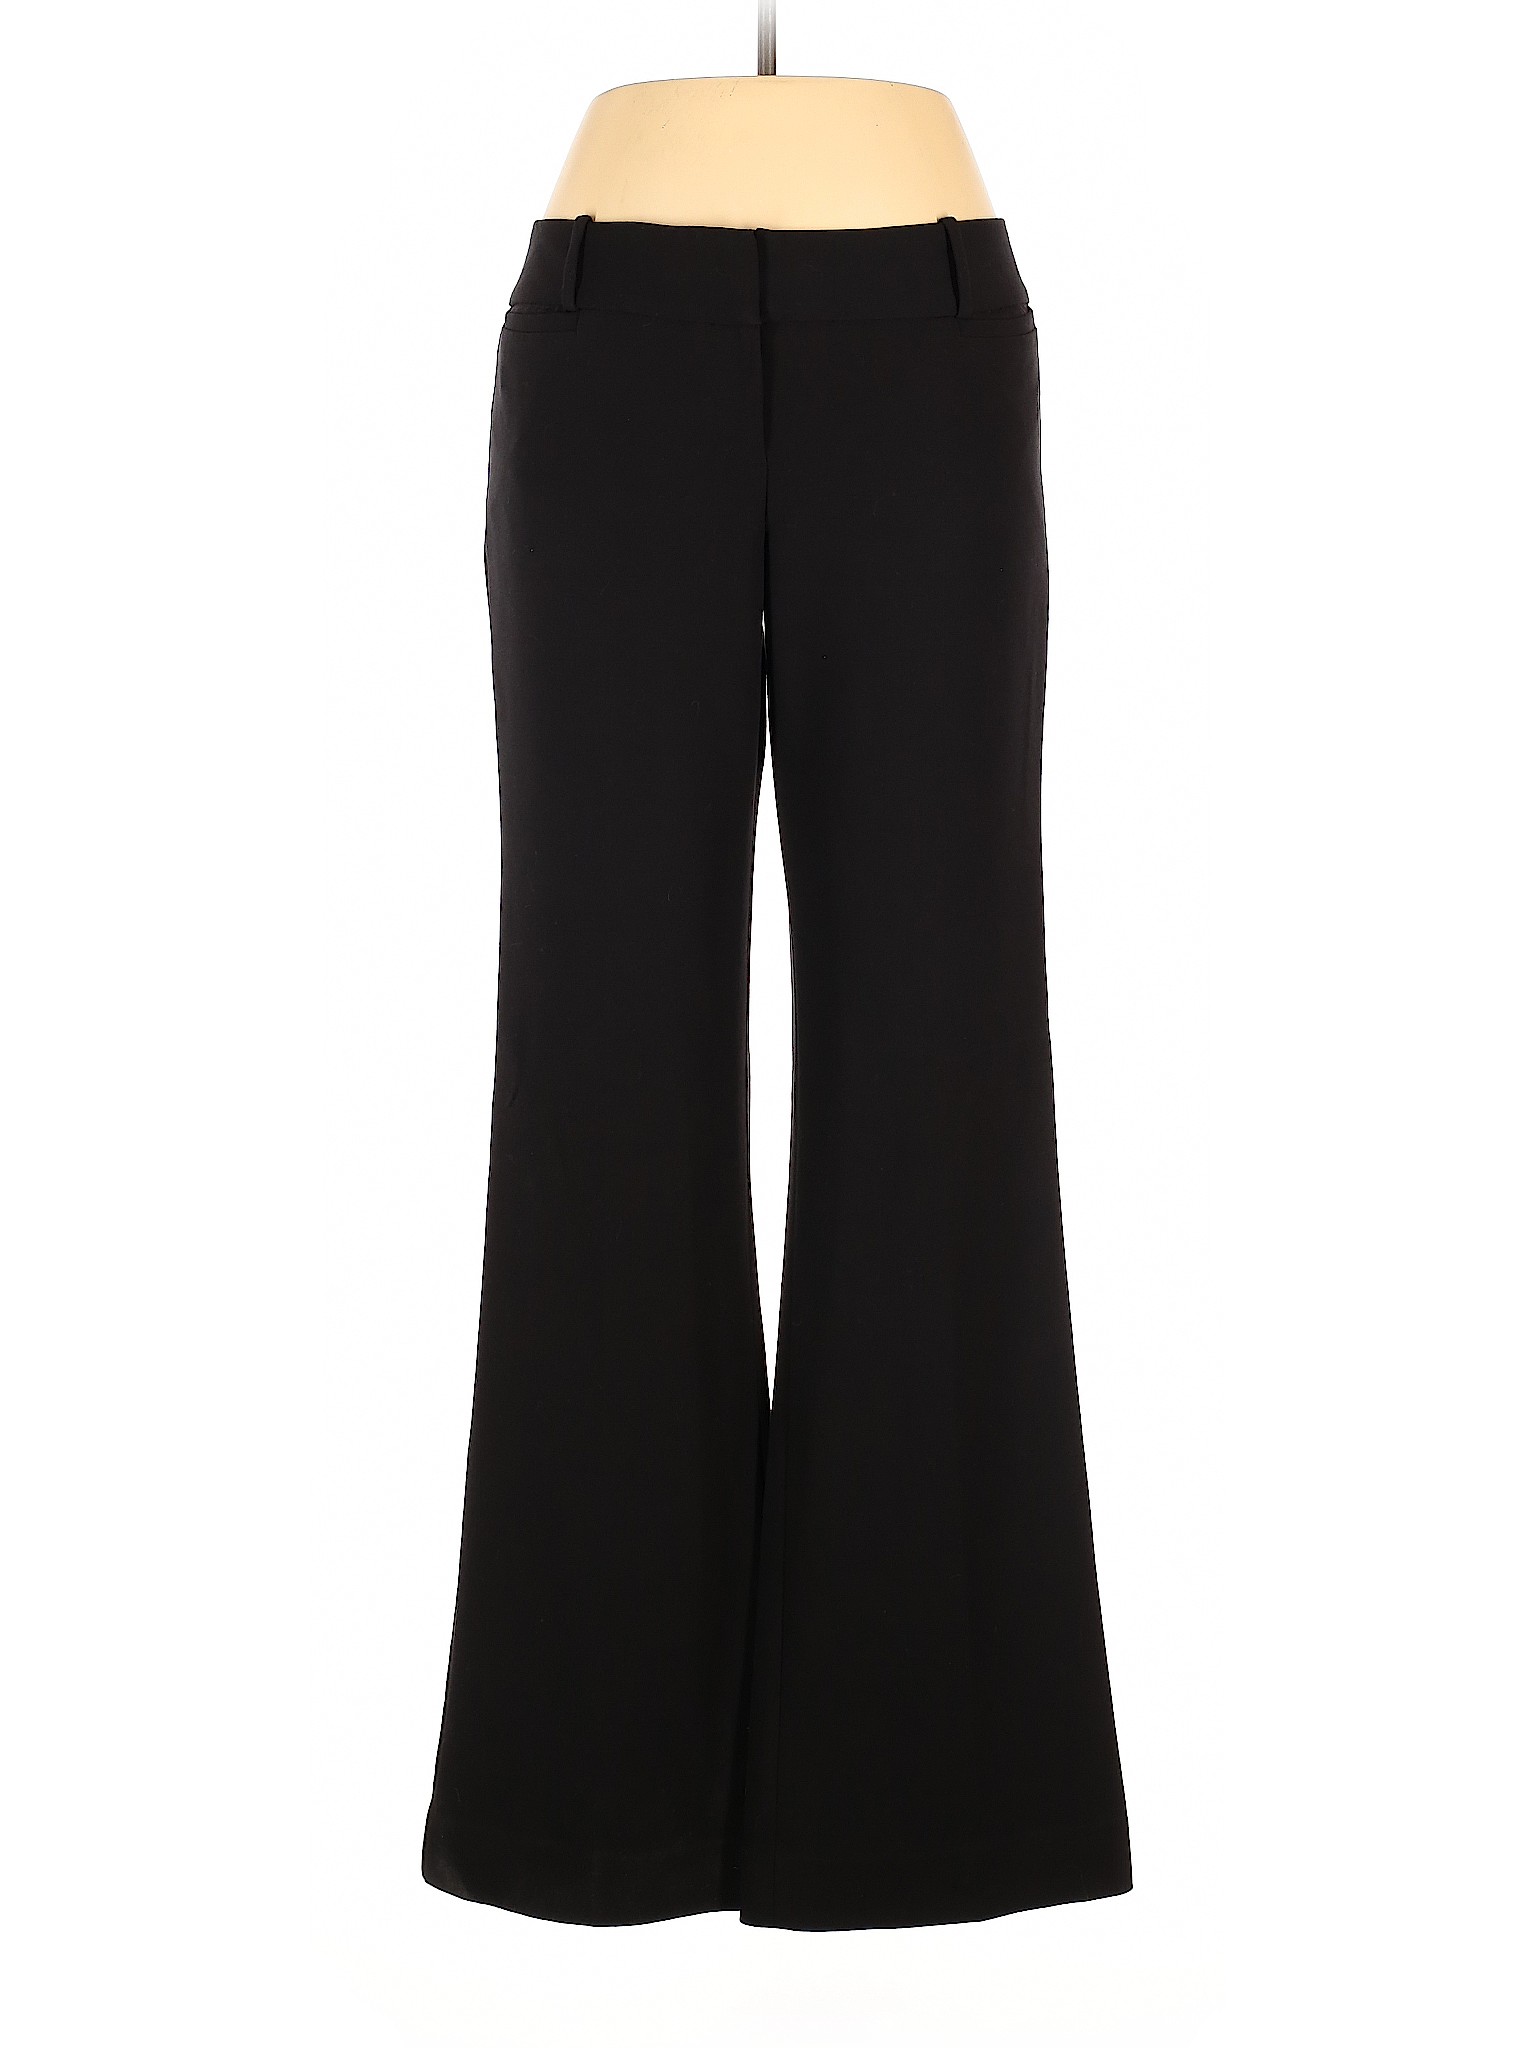 LTD Women Black Dress Pants 10 | eBay